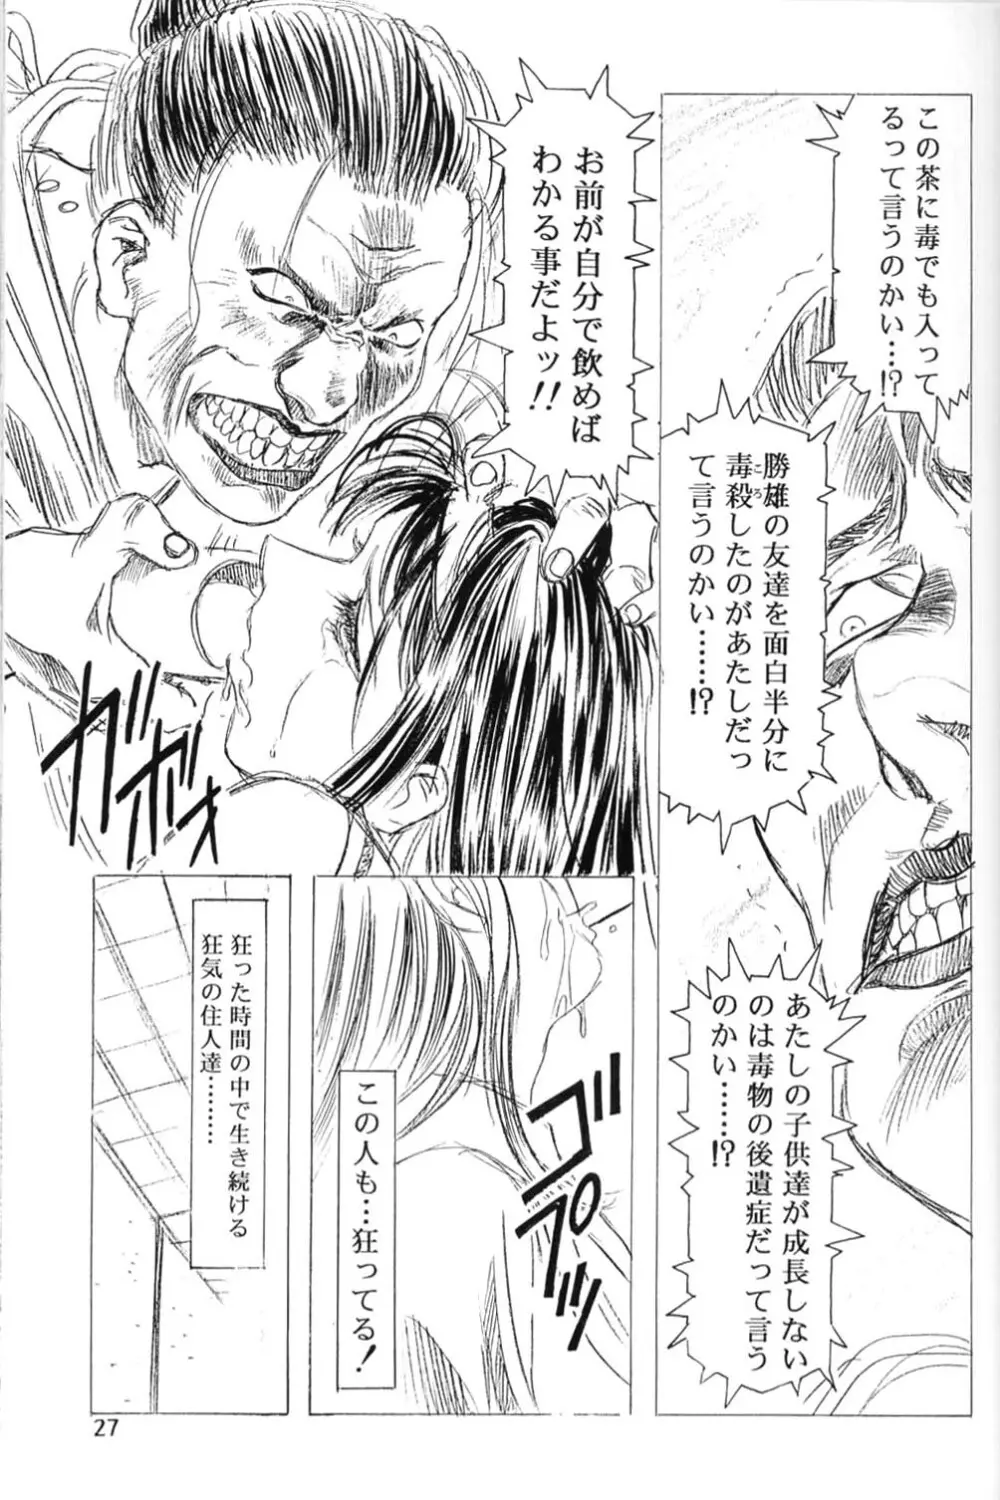 Sakura Ame 2.5 - page26